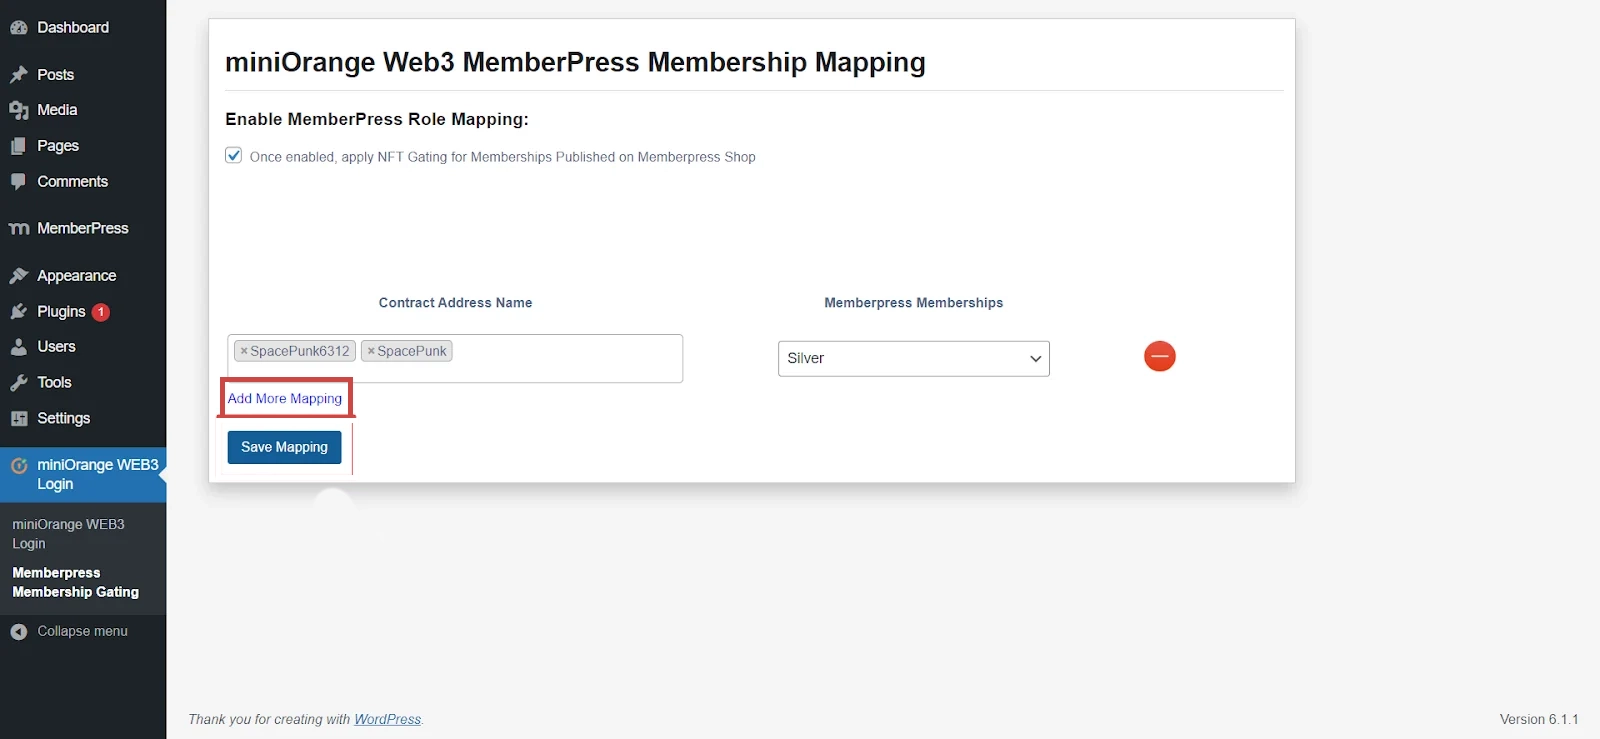 WordPresss Web3 login memberpress integration addon- add more